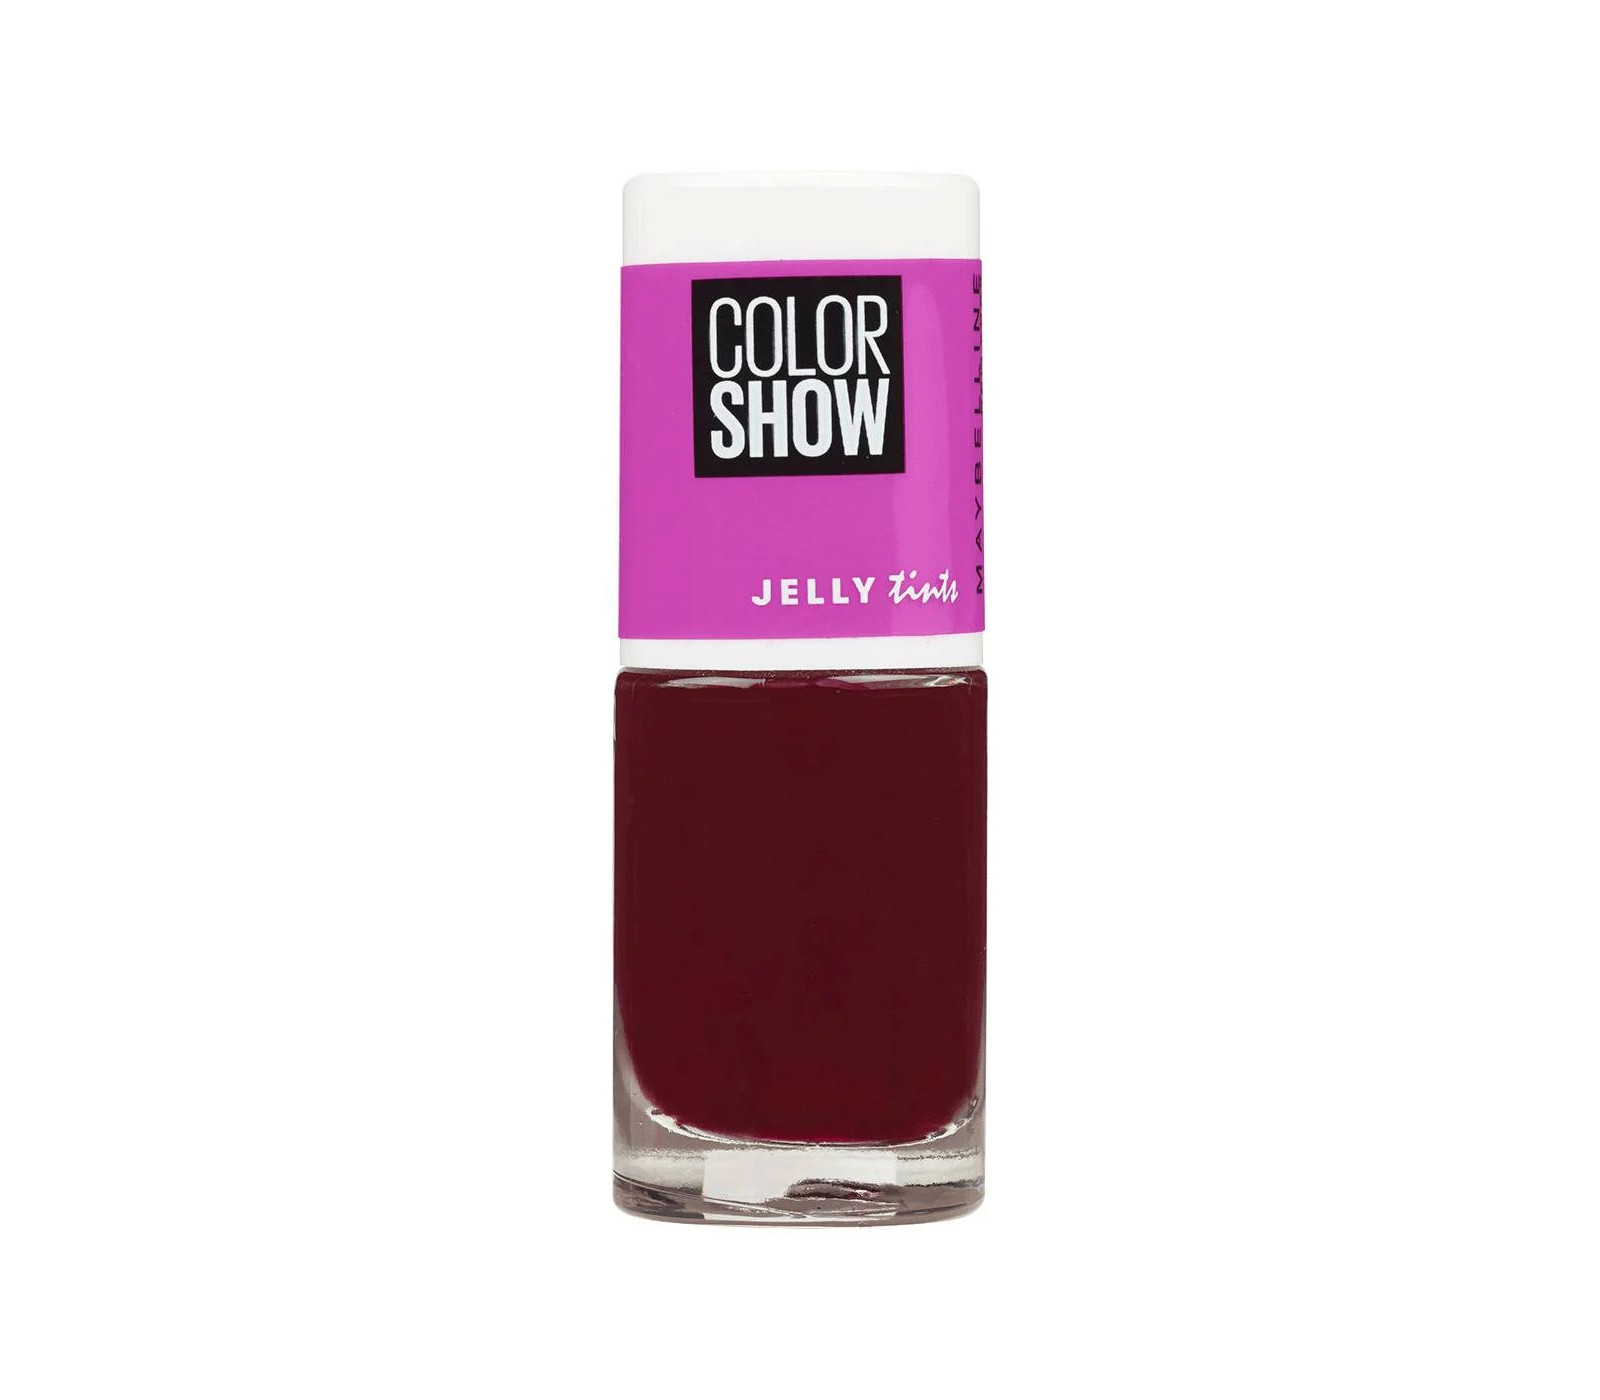 Nail Cosmechic Polish - Tints Nail - Polish Maybelline New | Colorshow York Jelly